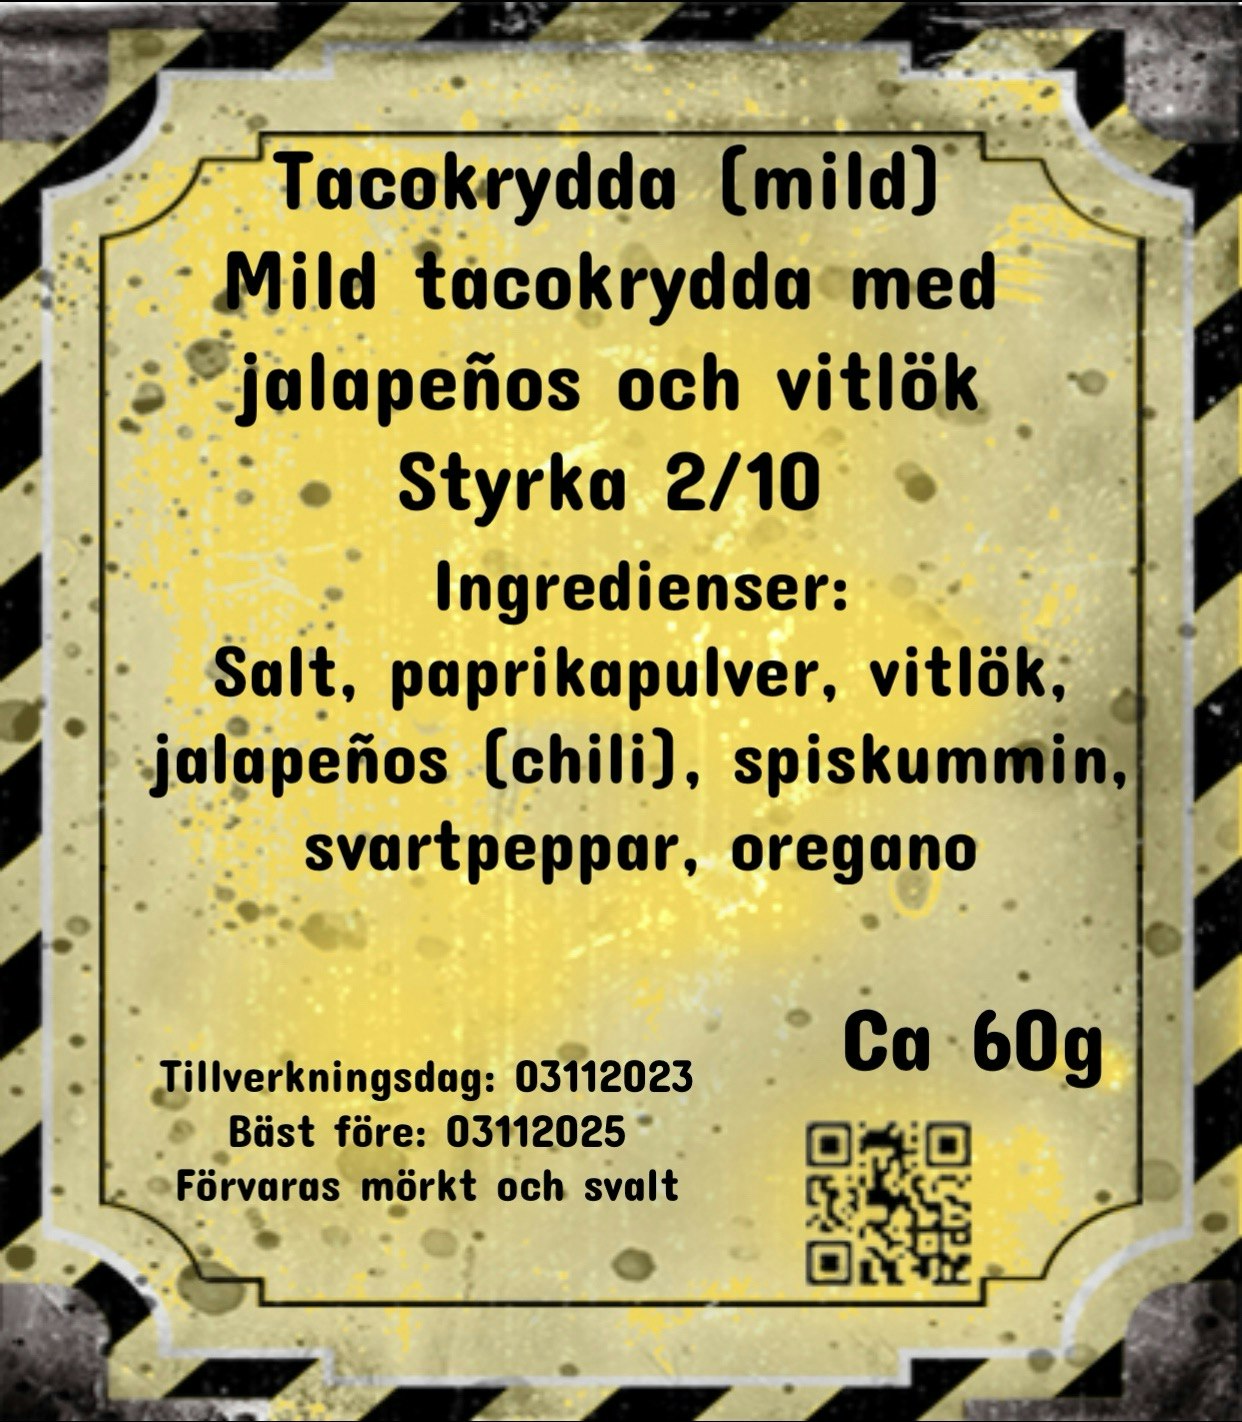 Tacokrydda (mild)